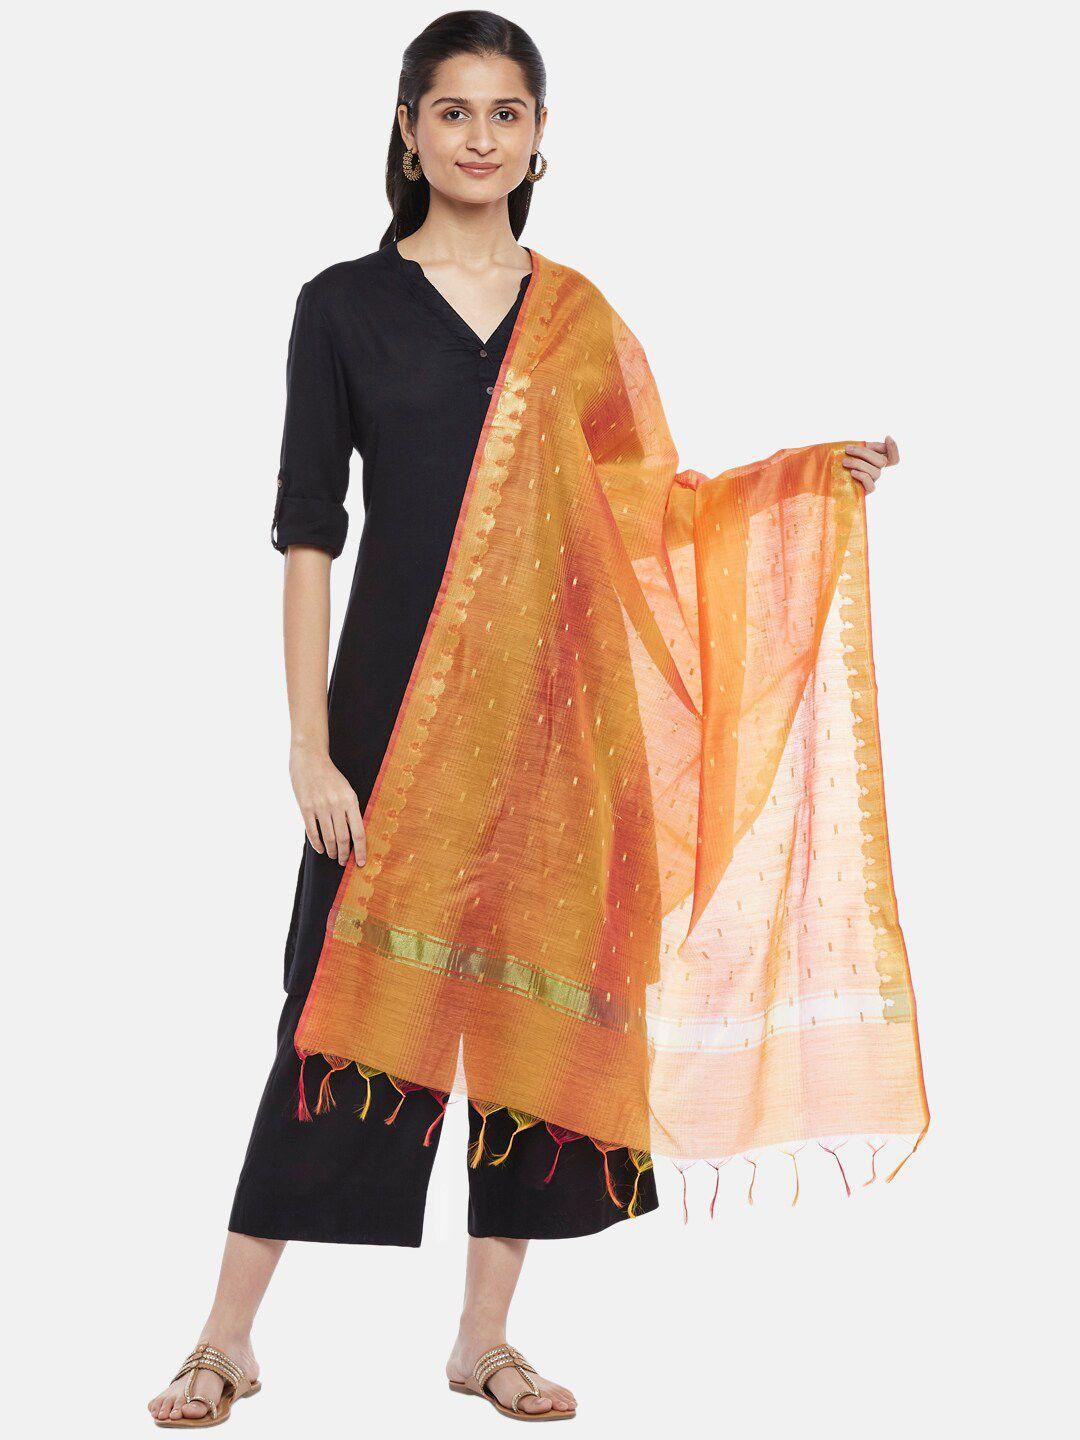 rangmanch by pantaloons women orange & gold-toned ethnic motifs woven design dupatta